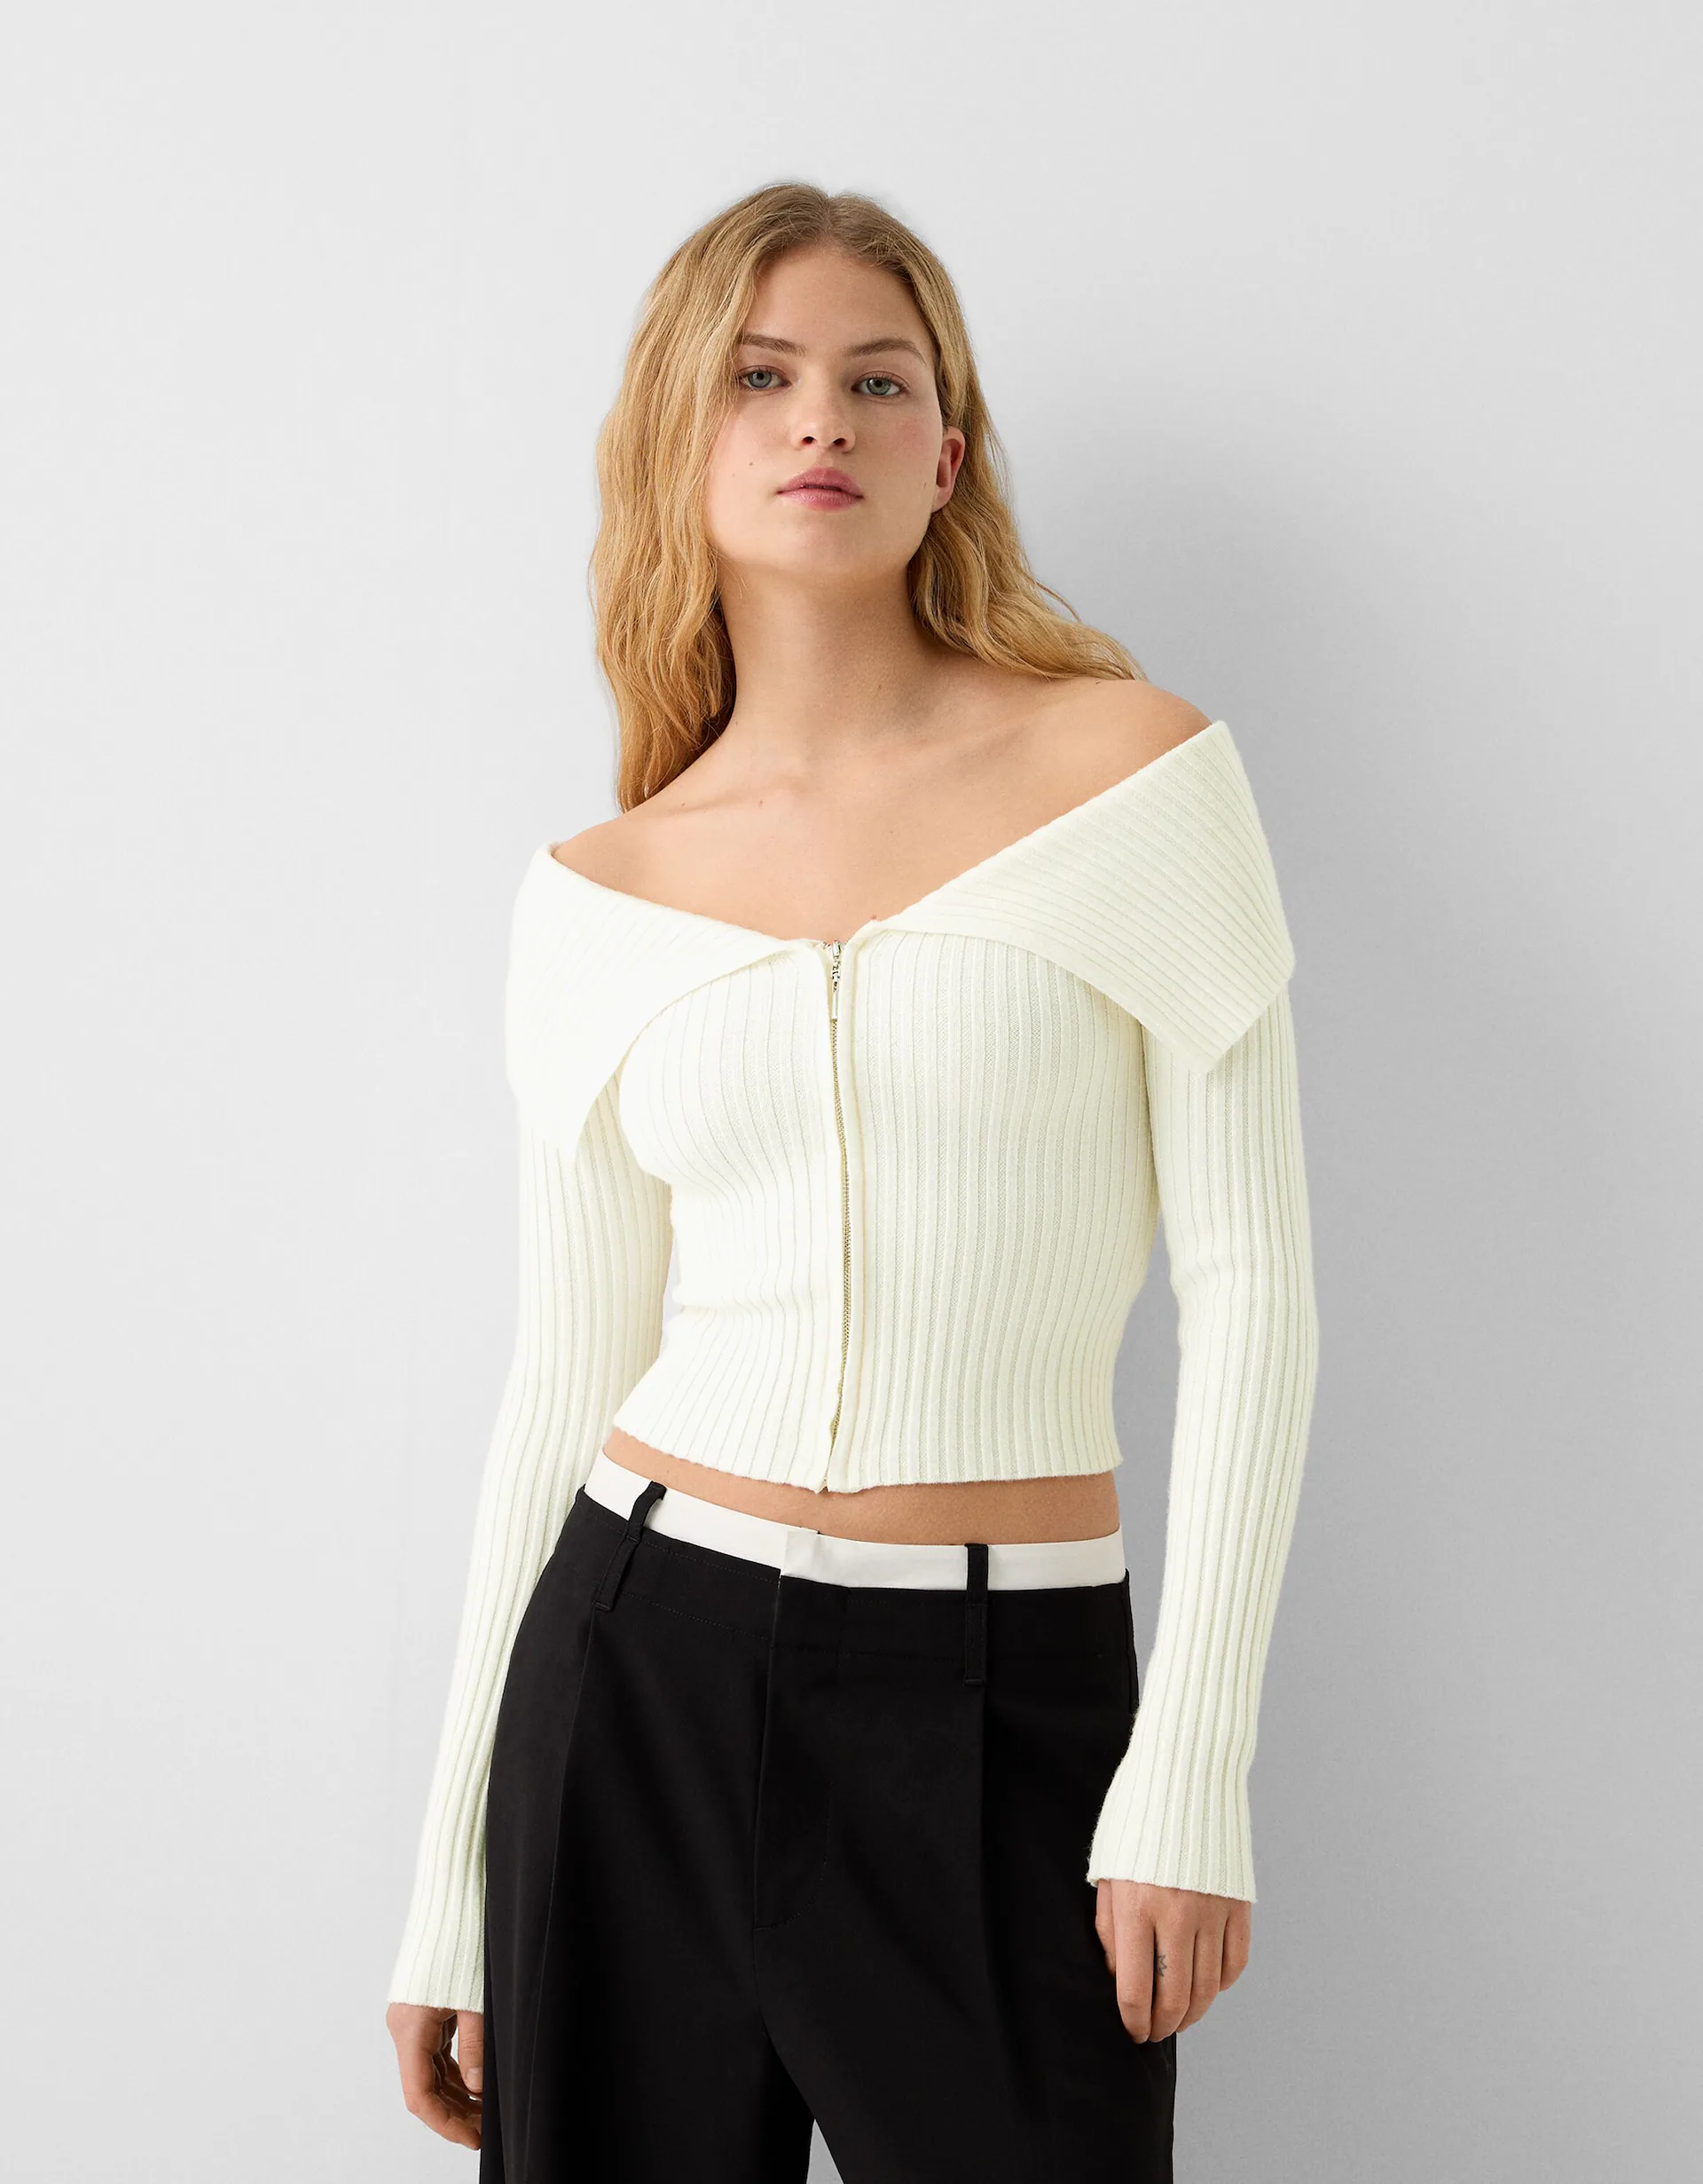 Bardot neck | Bershka and cardigan cardigans - Sweaters zip-up - Women